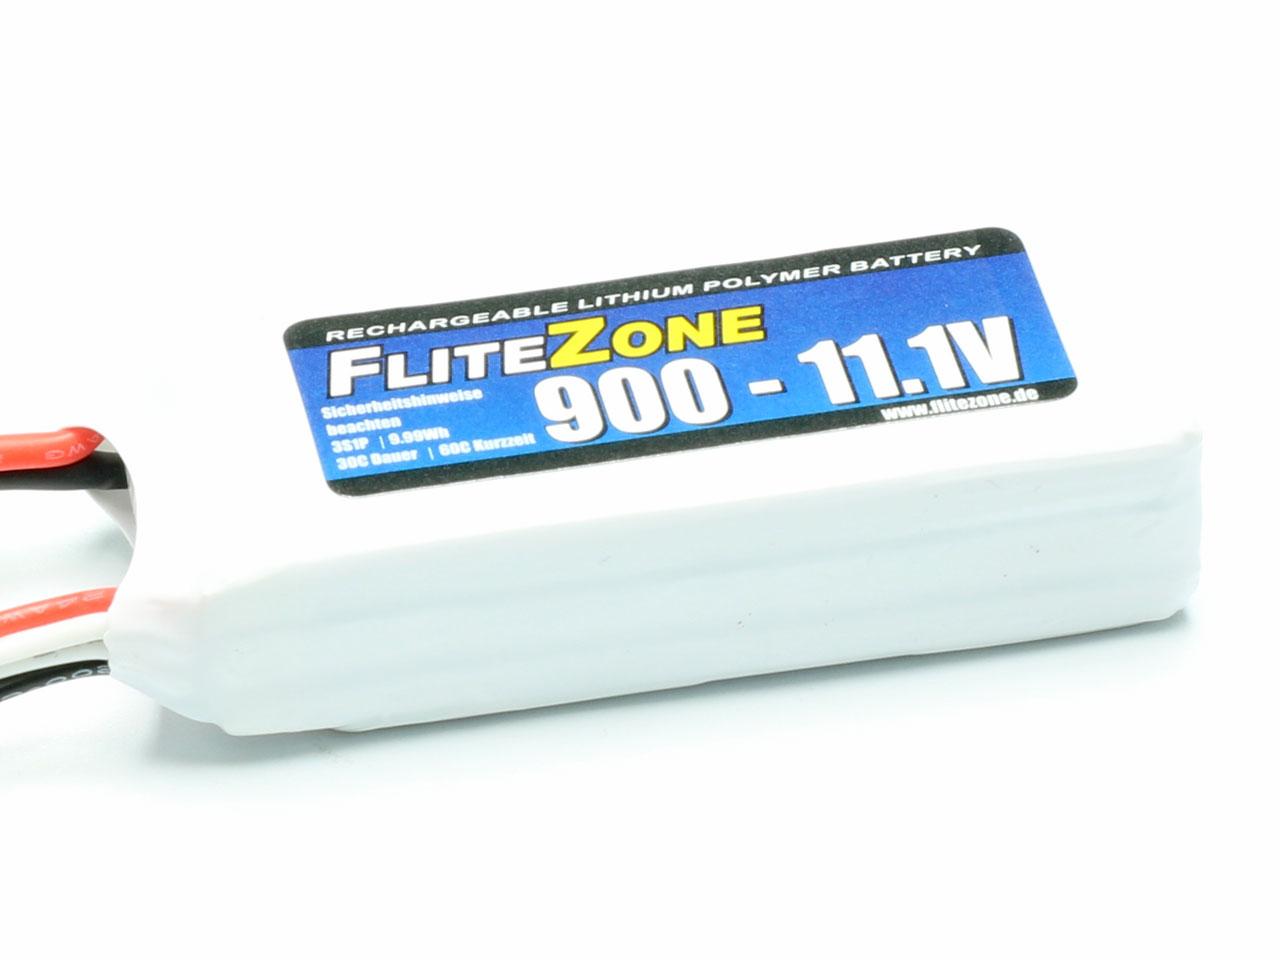 Batterie Lipo FliteZone 900 - 11,1V